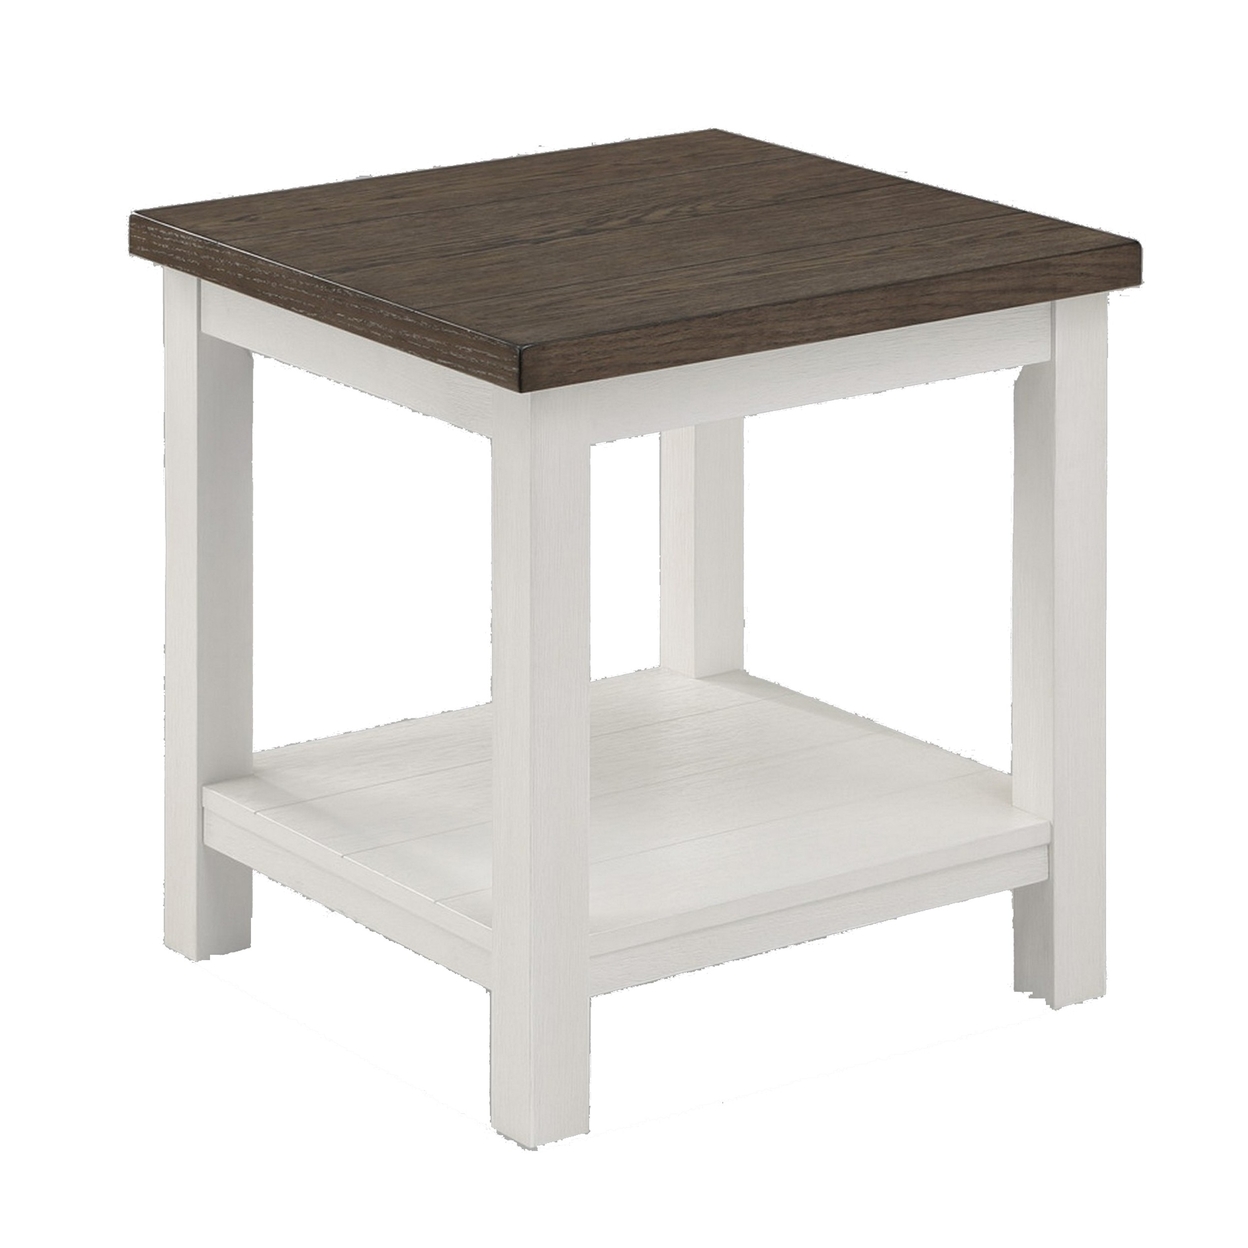 Mon 24 Inch Square End Table, Open Bottom Shelf, Brown Top, White Frame- Saltoro Sherpi